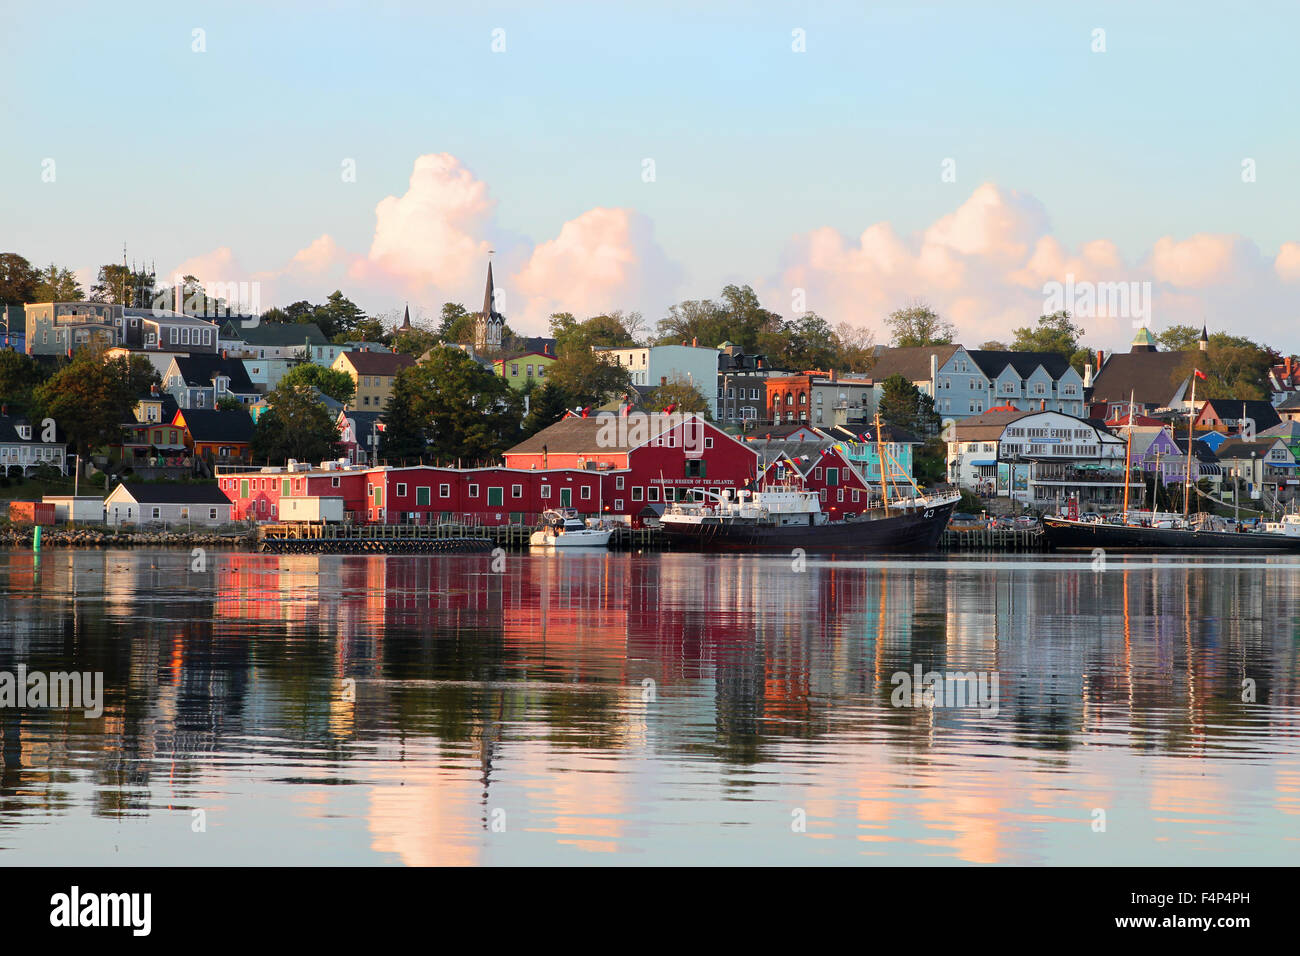 August 5. 2014, Lunenburg, Nova Scotia: View of the famous harborfront of Lunenburg, Nova Scotia a UNESCO world heritage site. Stock Photo